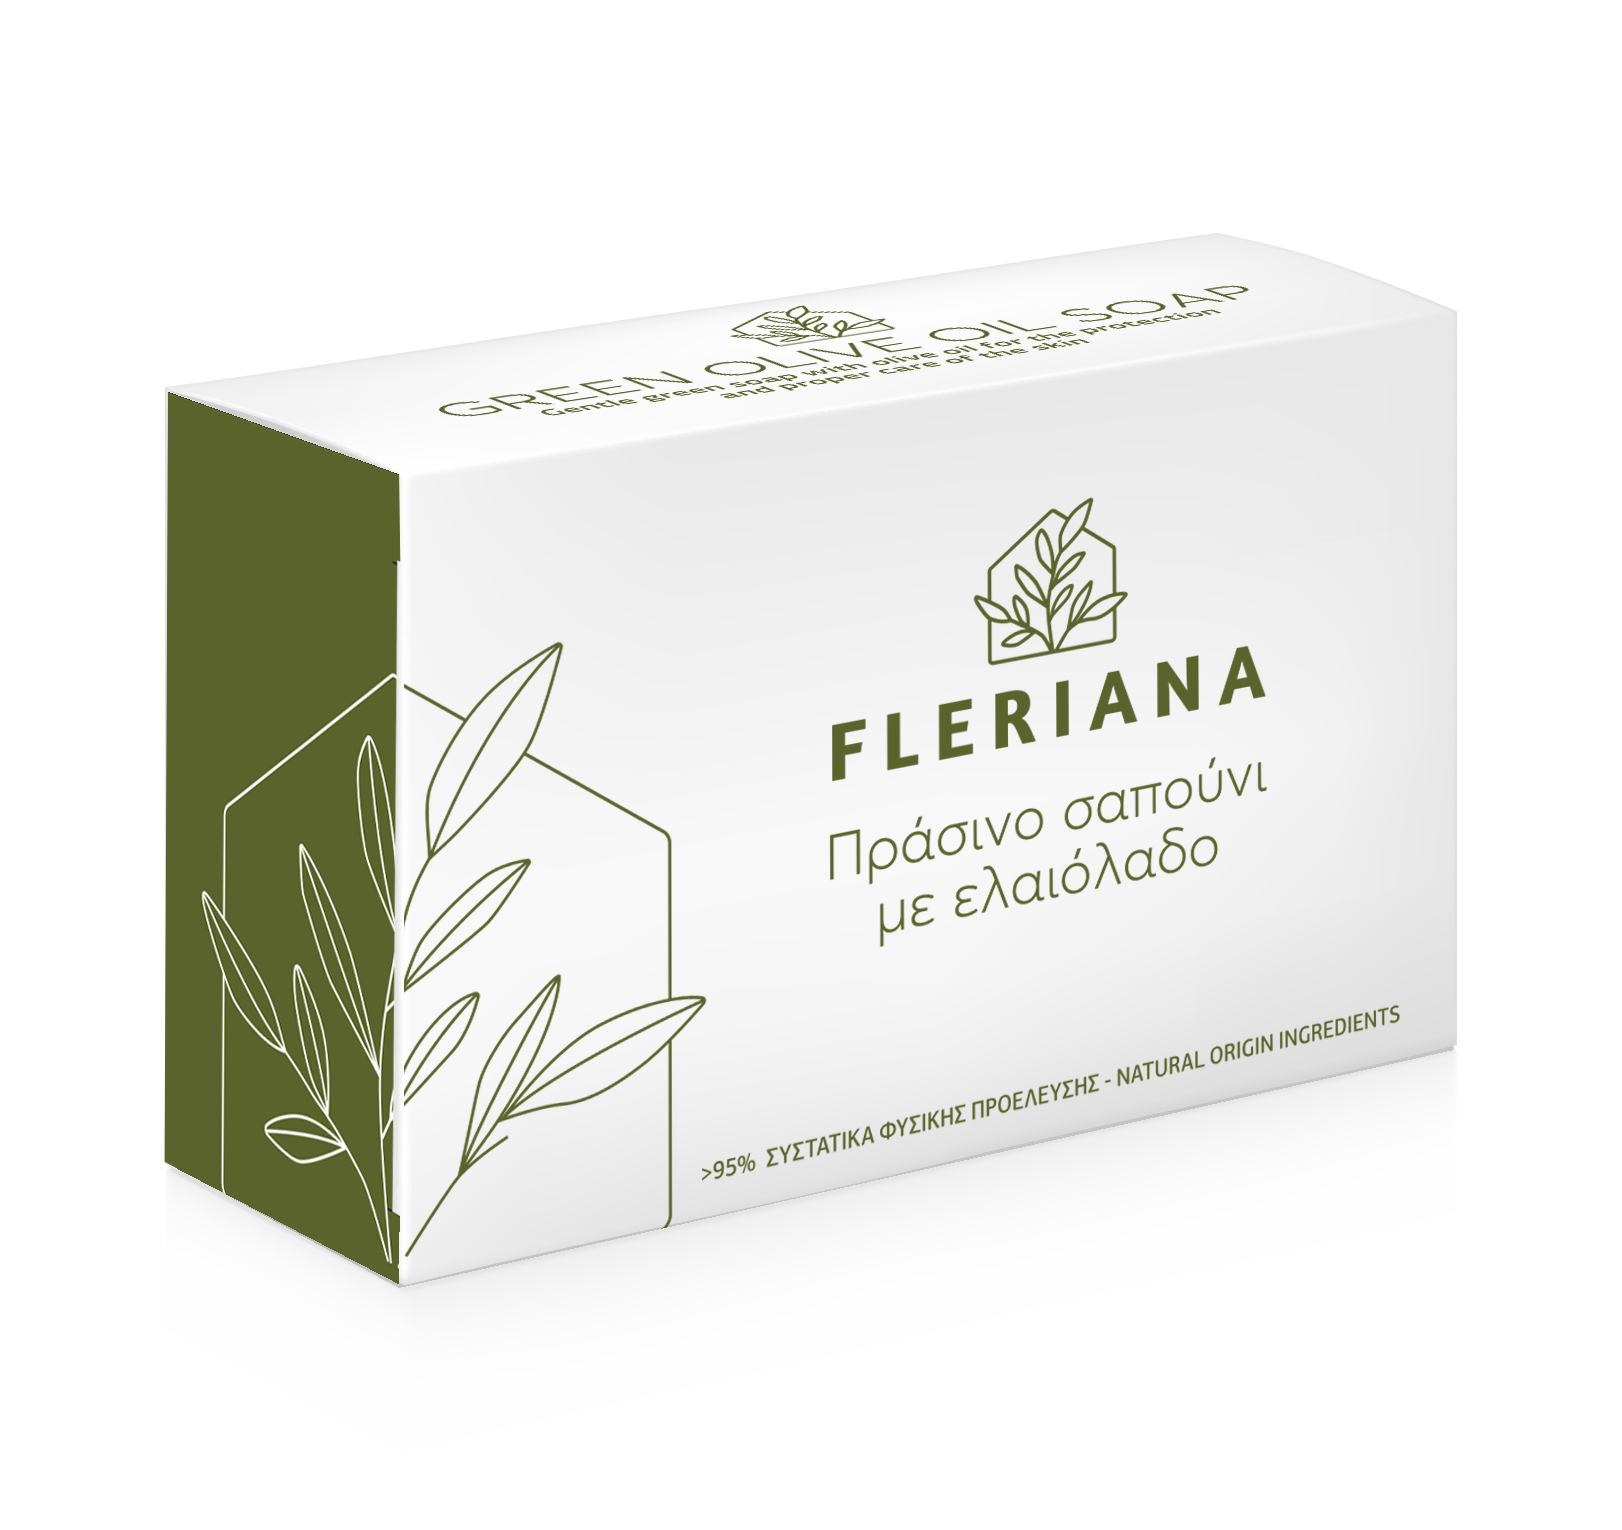 Fleriana green olive oil soap